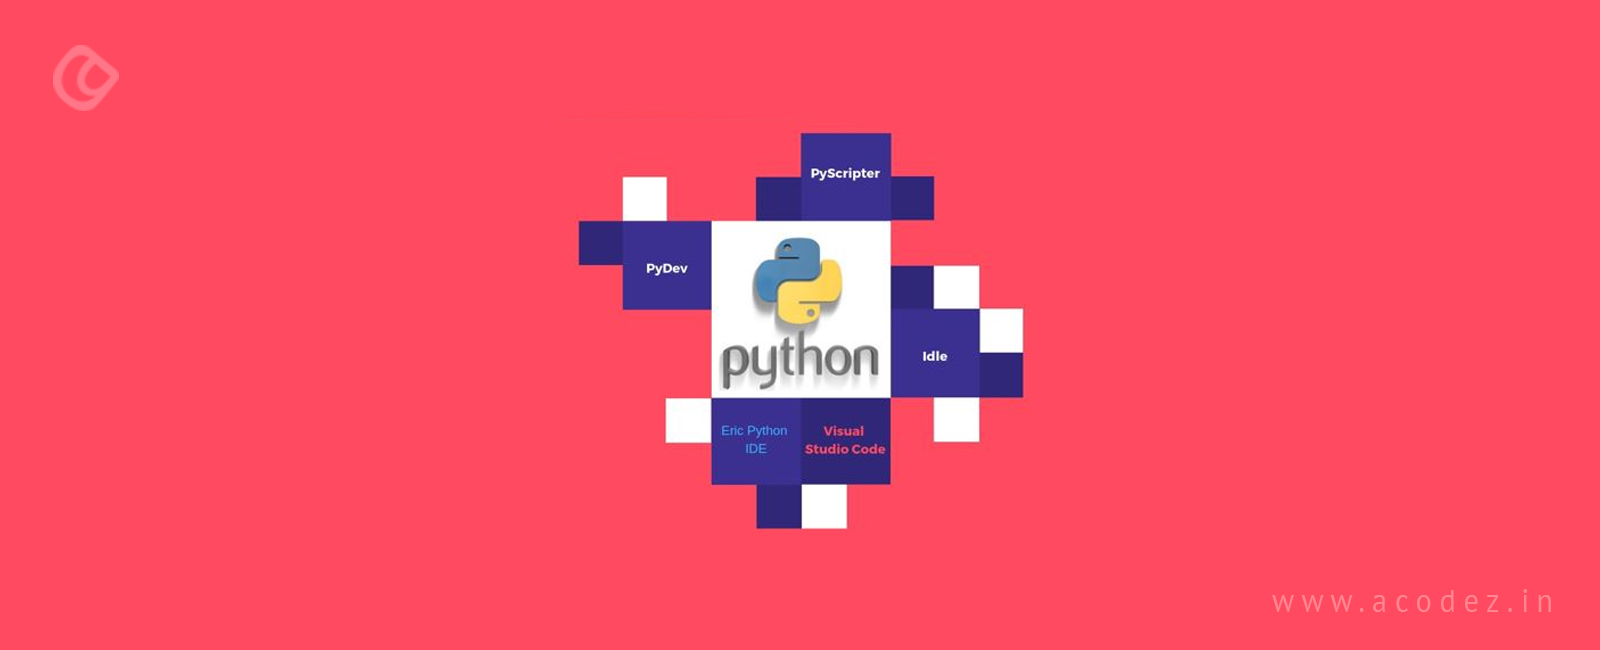 best python ide learning